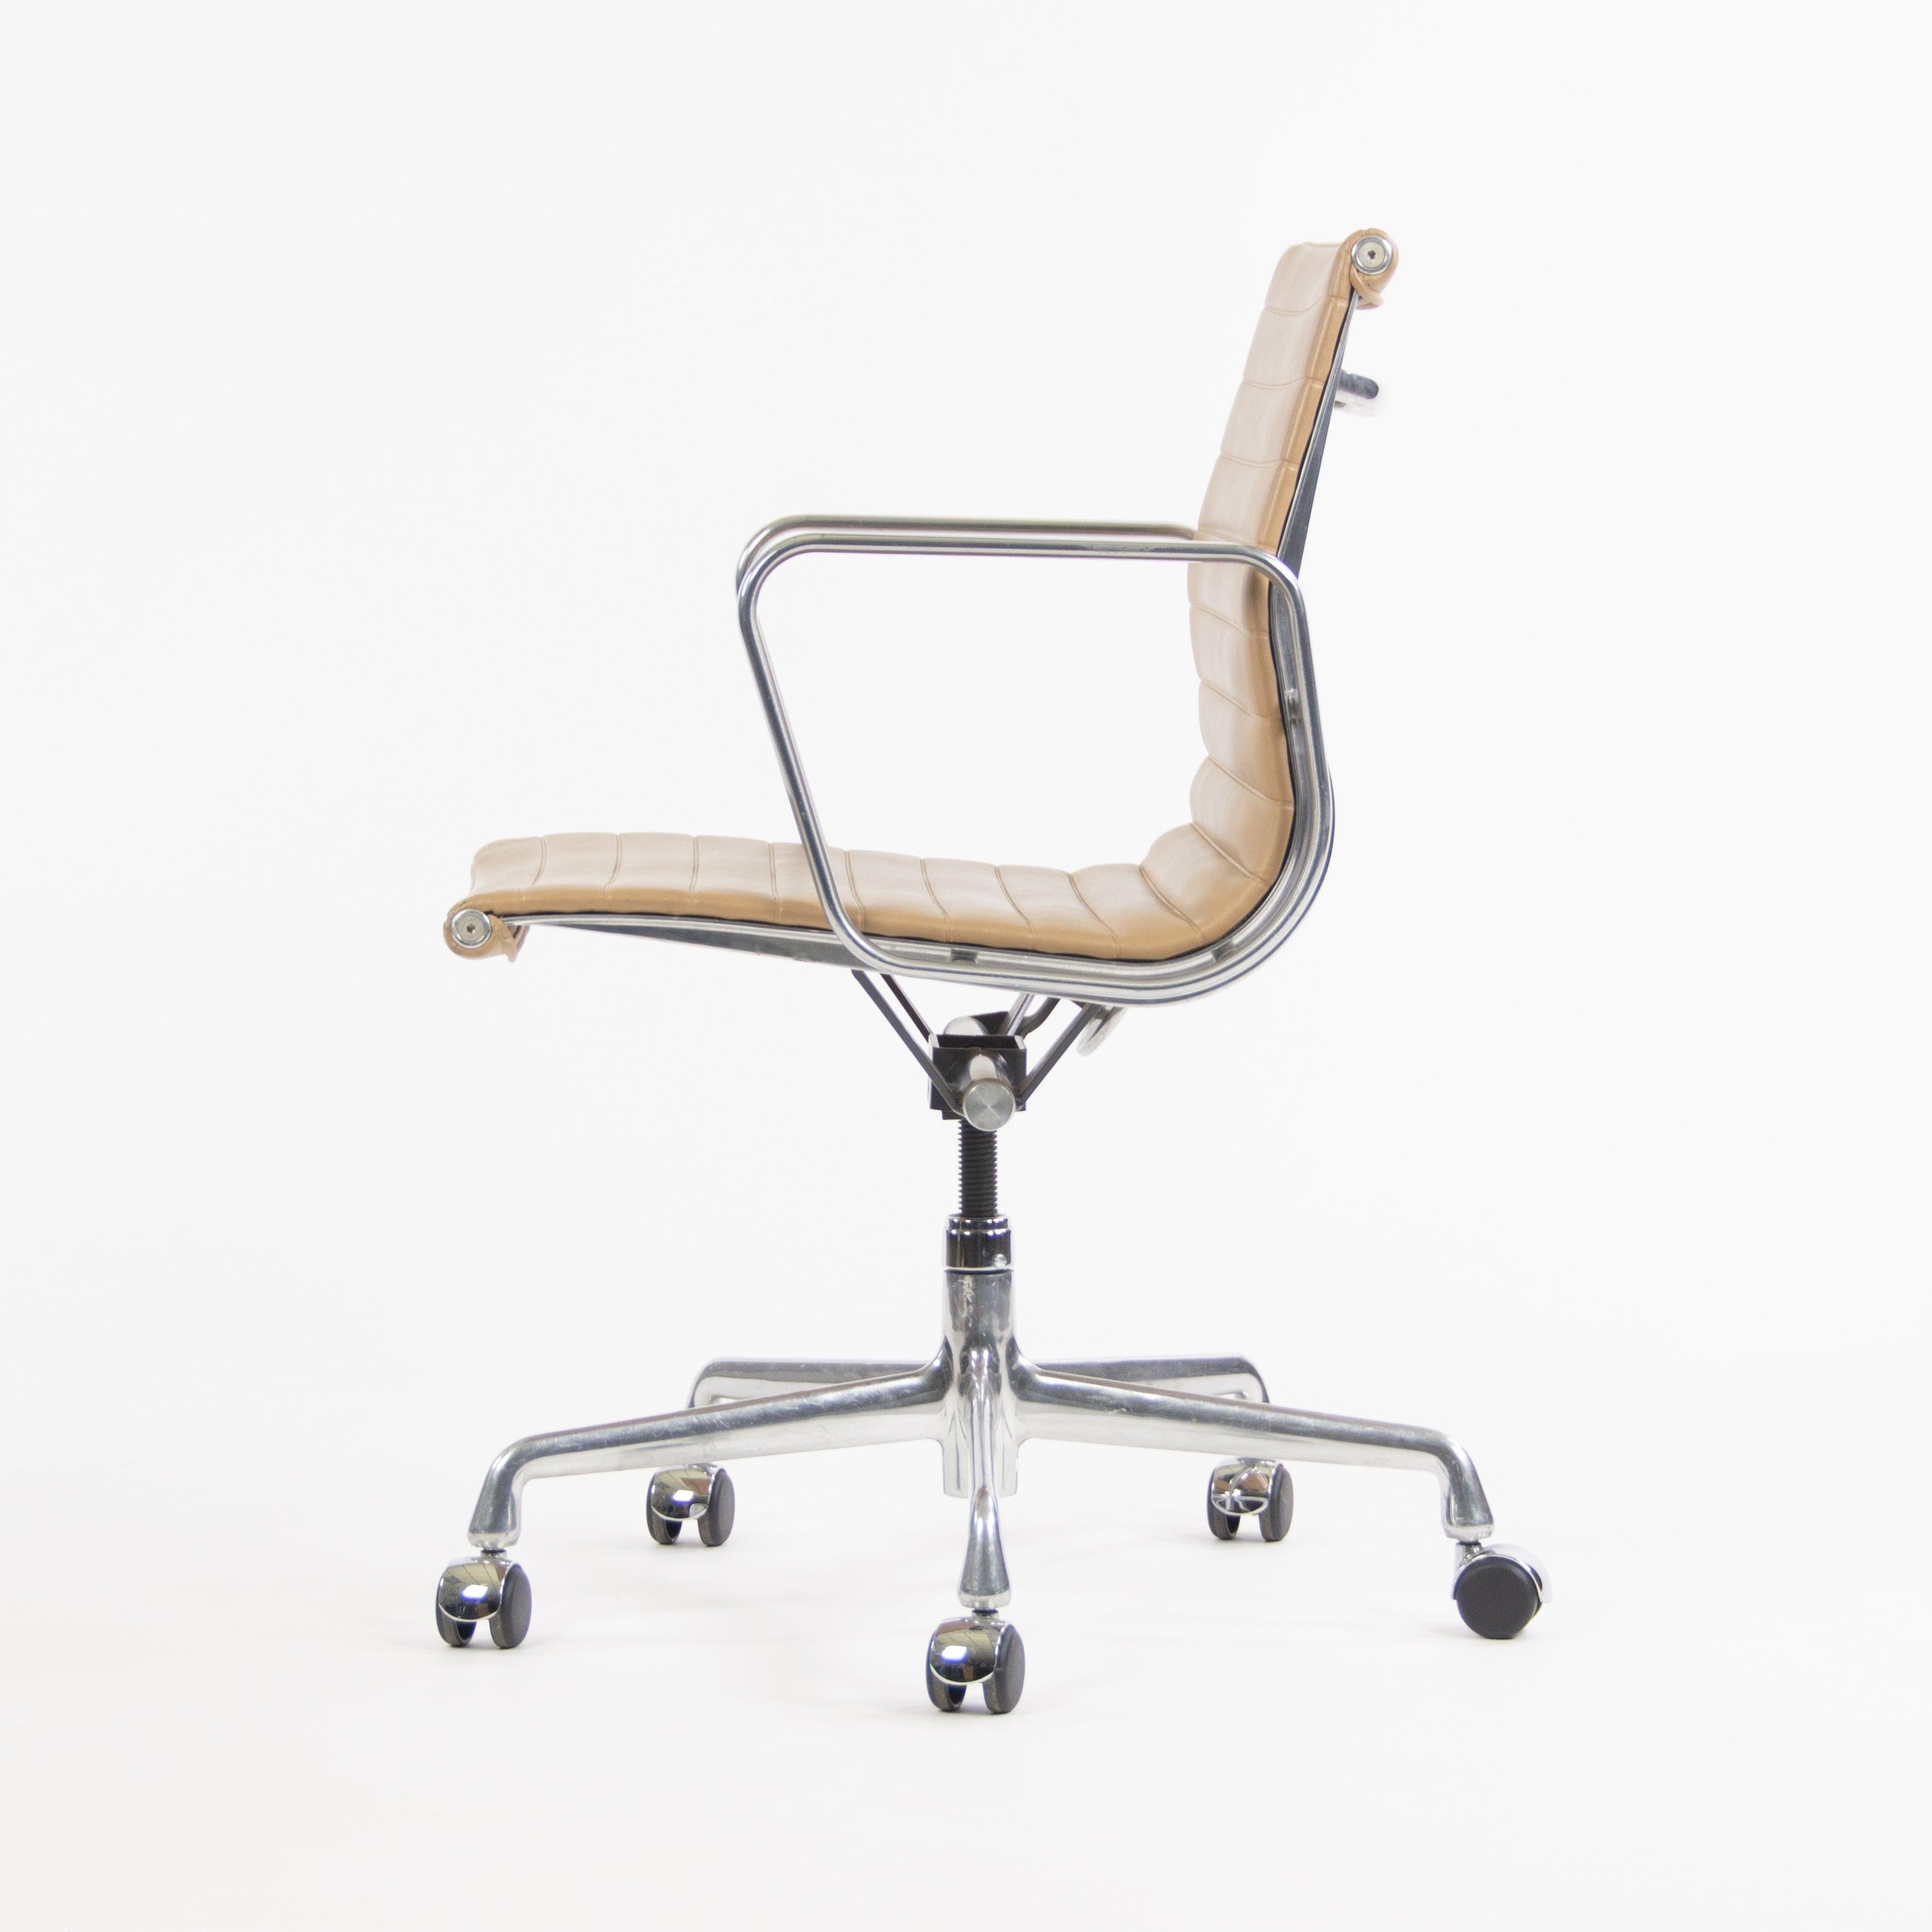 Américain 2008 Herman Miller Aluminum Group Management Desk Chair in Tan Naugahyde (chaise de bureau en aluminium Eames) en vente